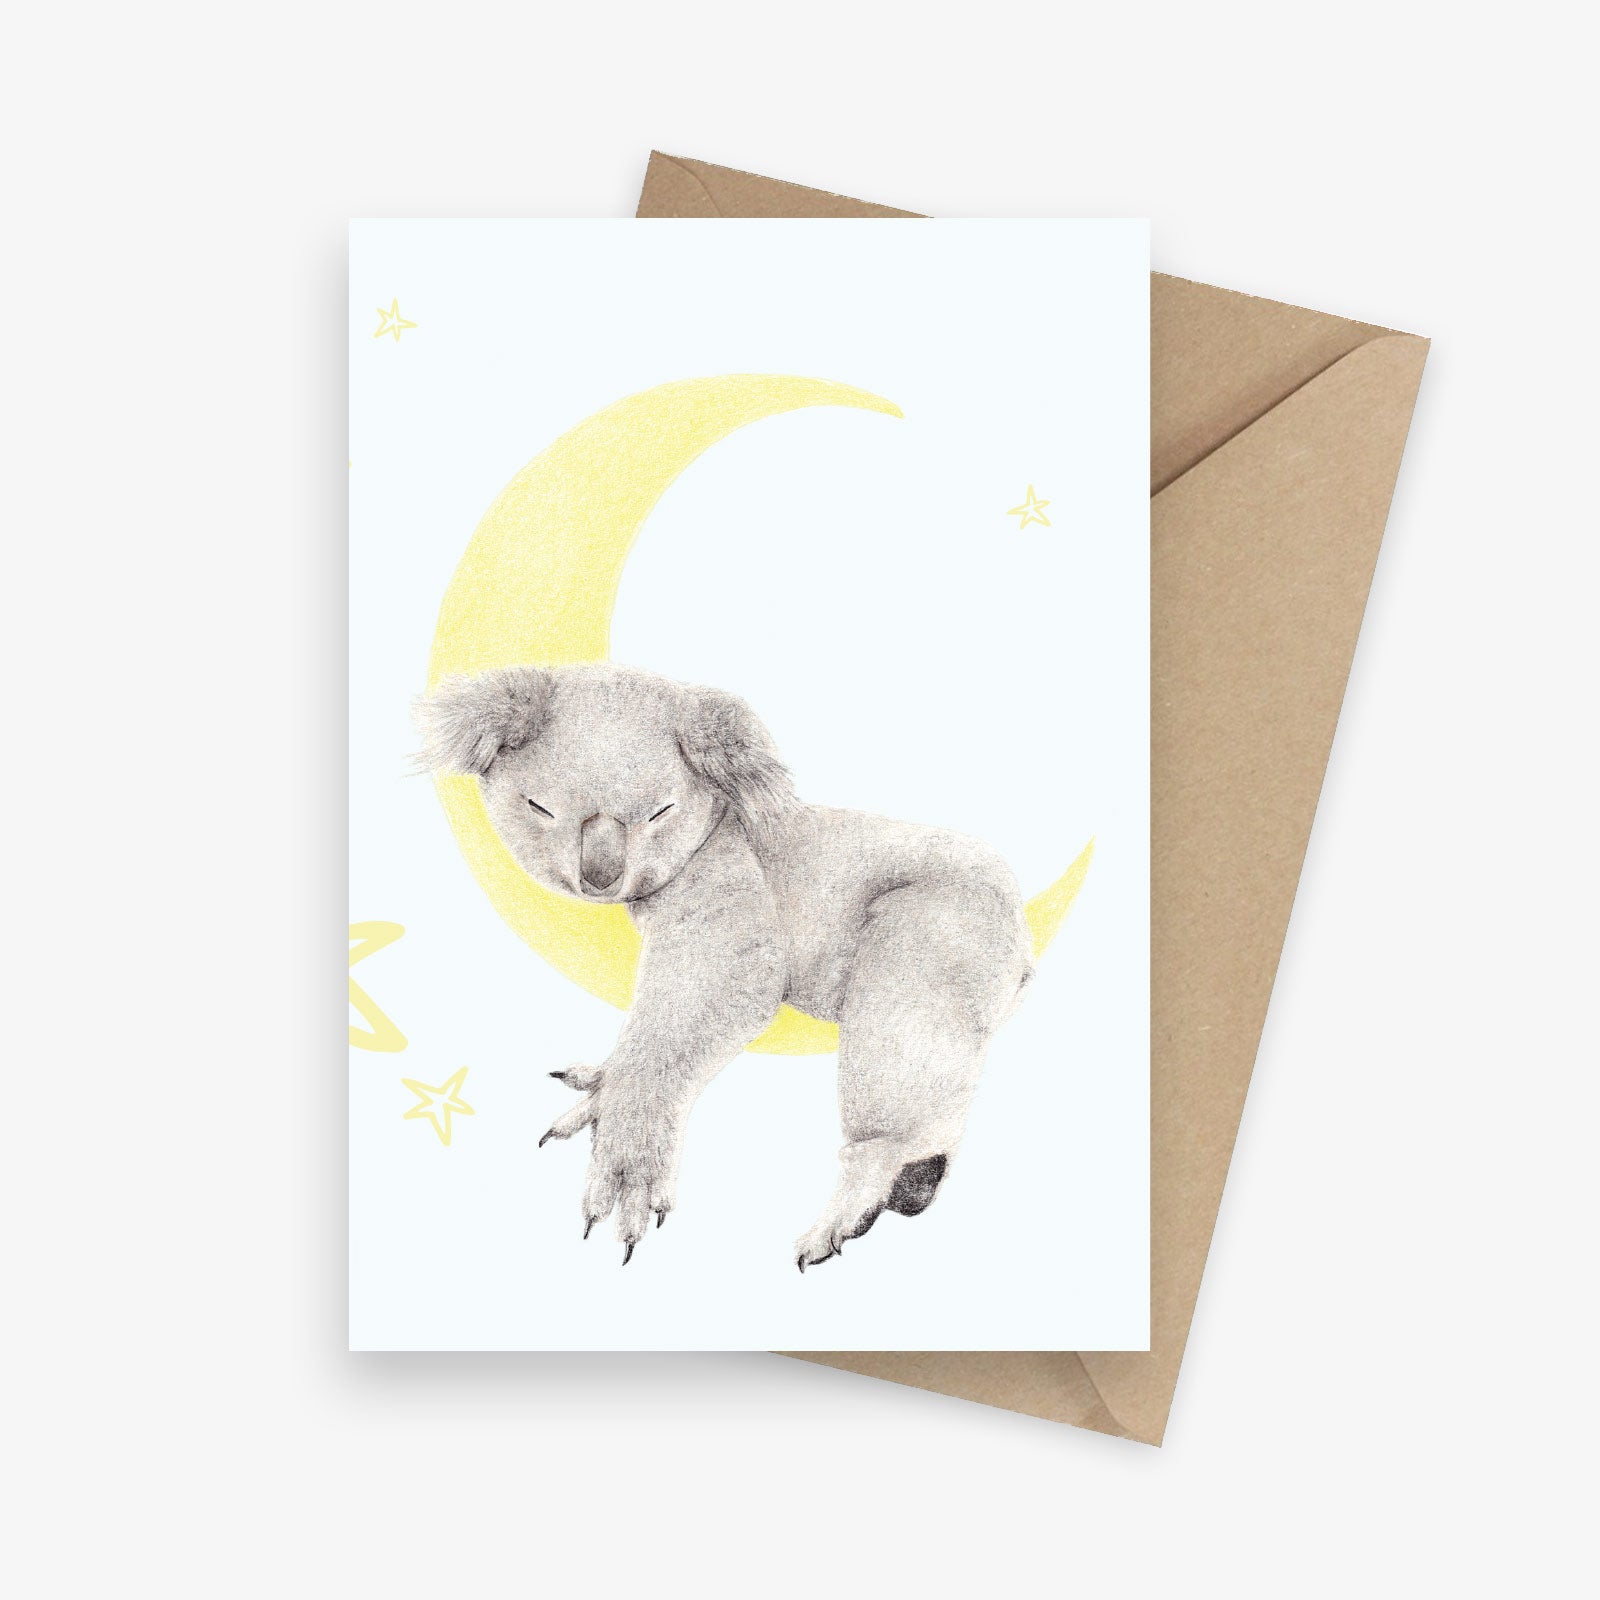 Greeting card featuring an Australian native koala sleeping on a moon.